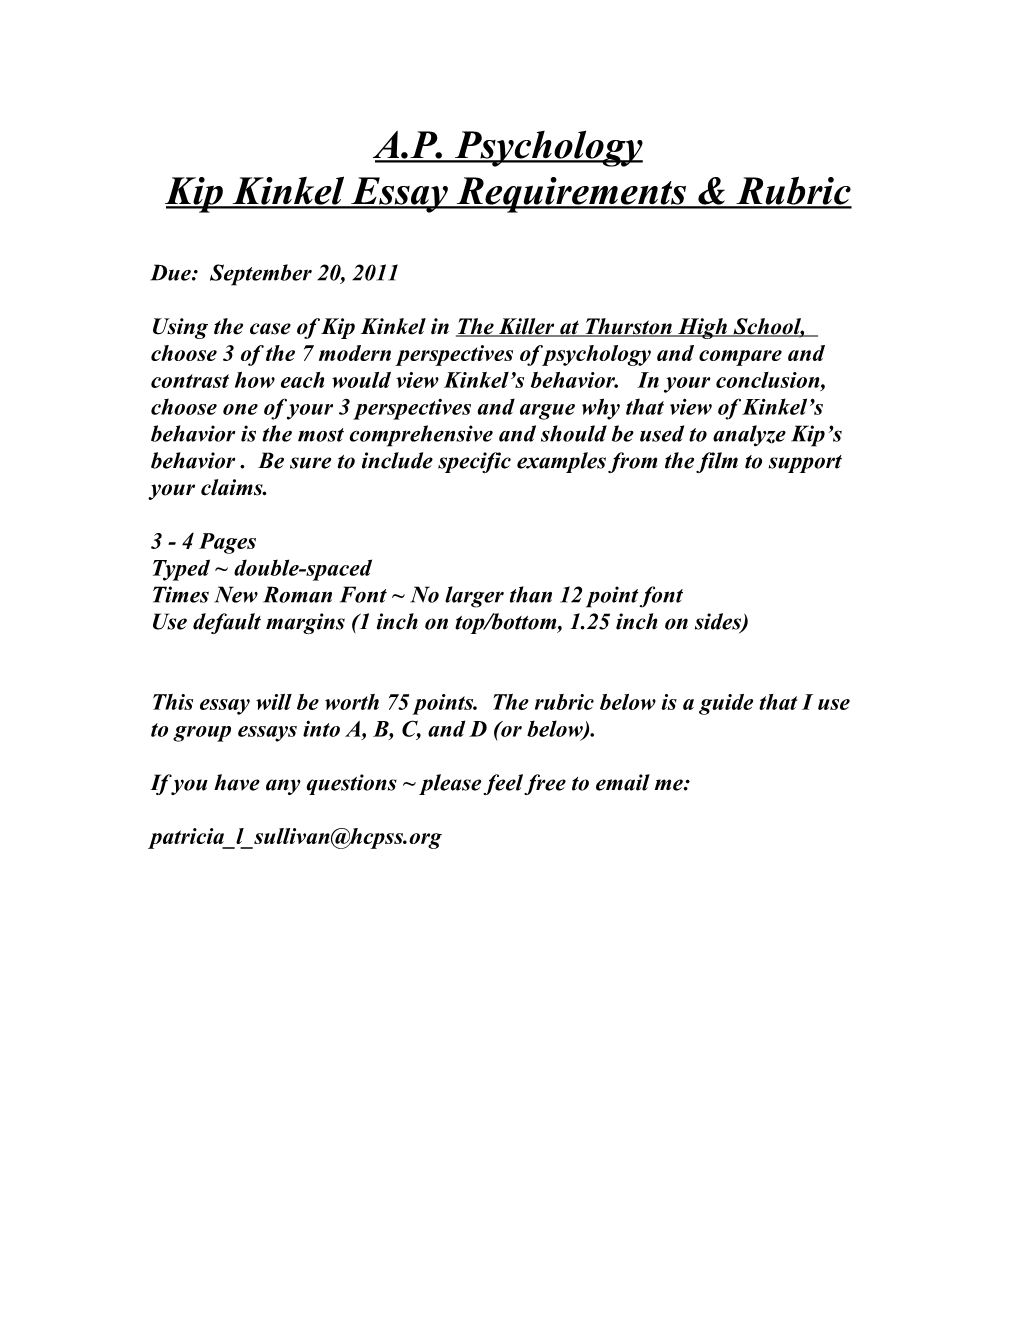 Kip Kinkel Essay Requirements & Rubric